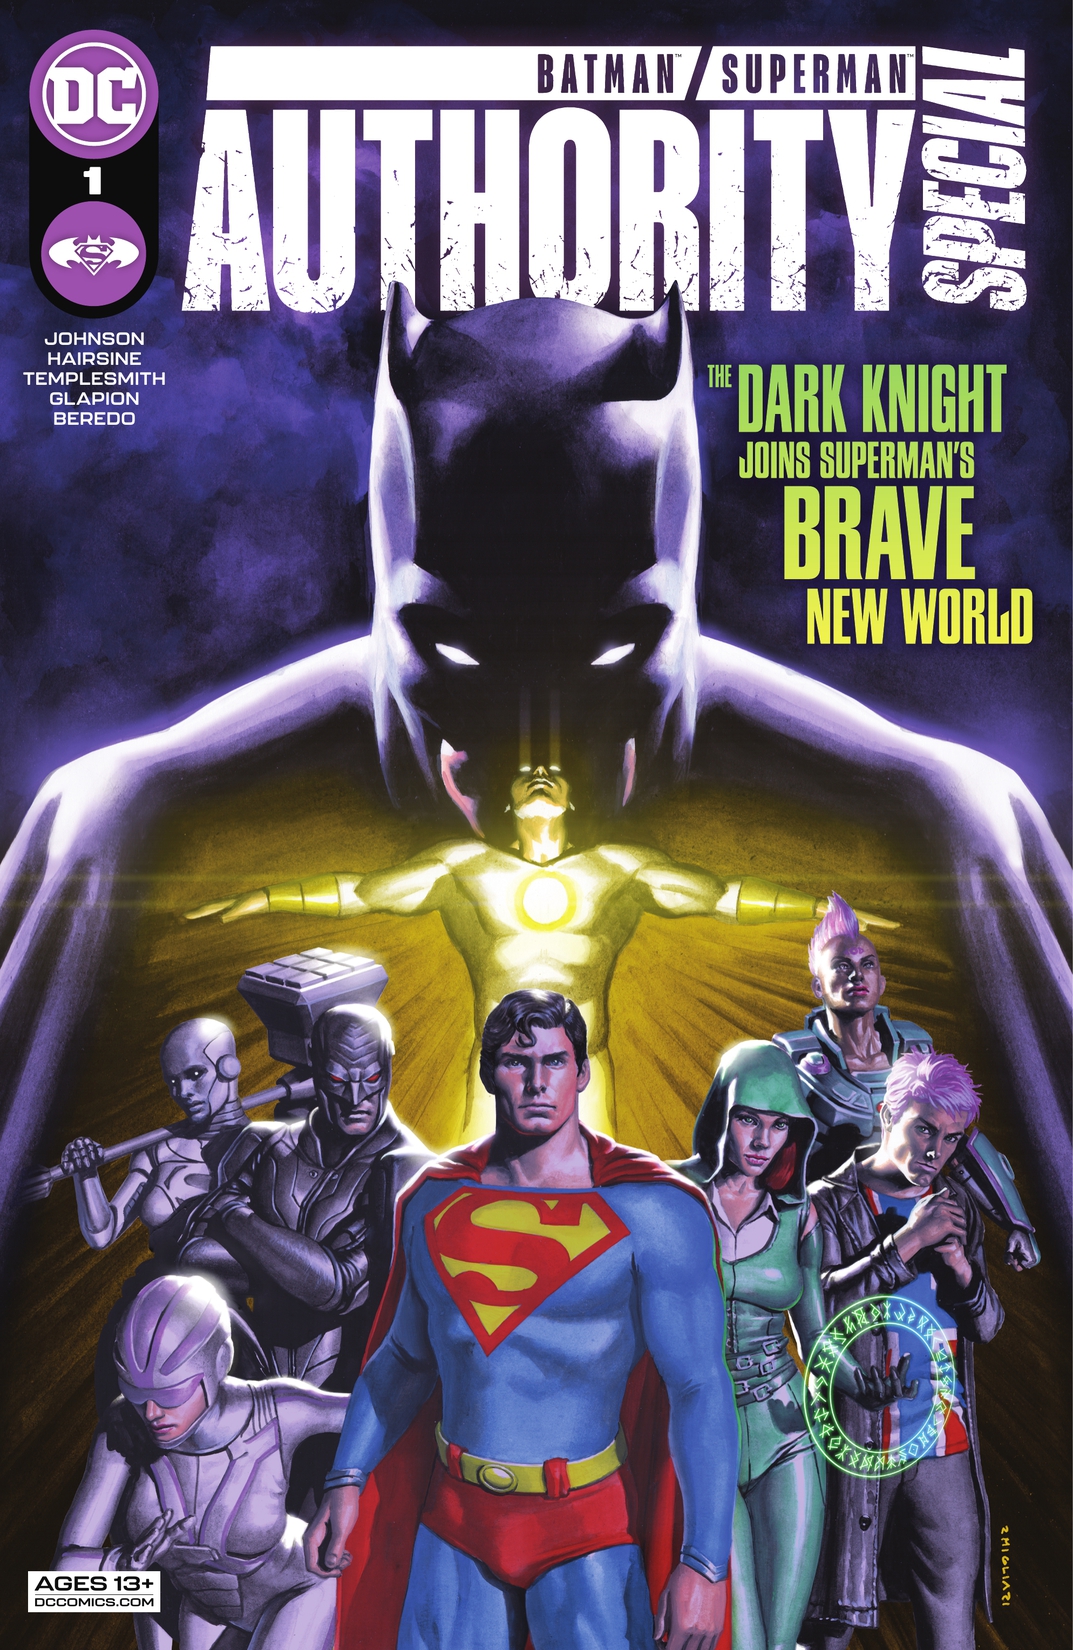 Batman/Superman: Authority Special #1 preview images